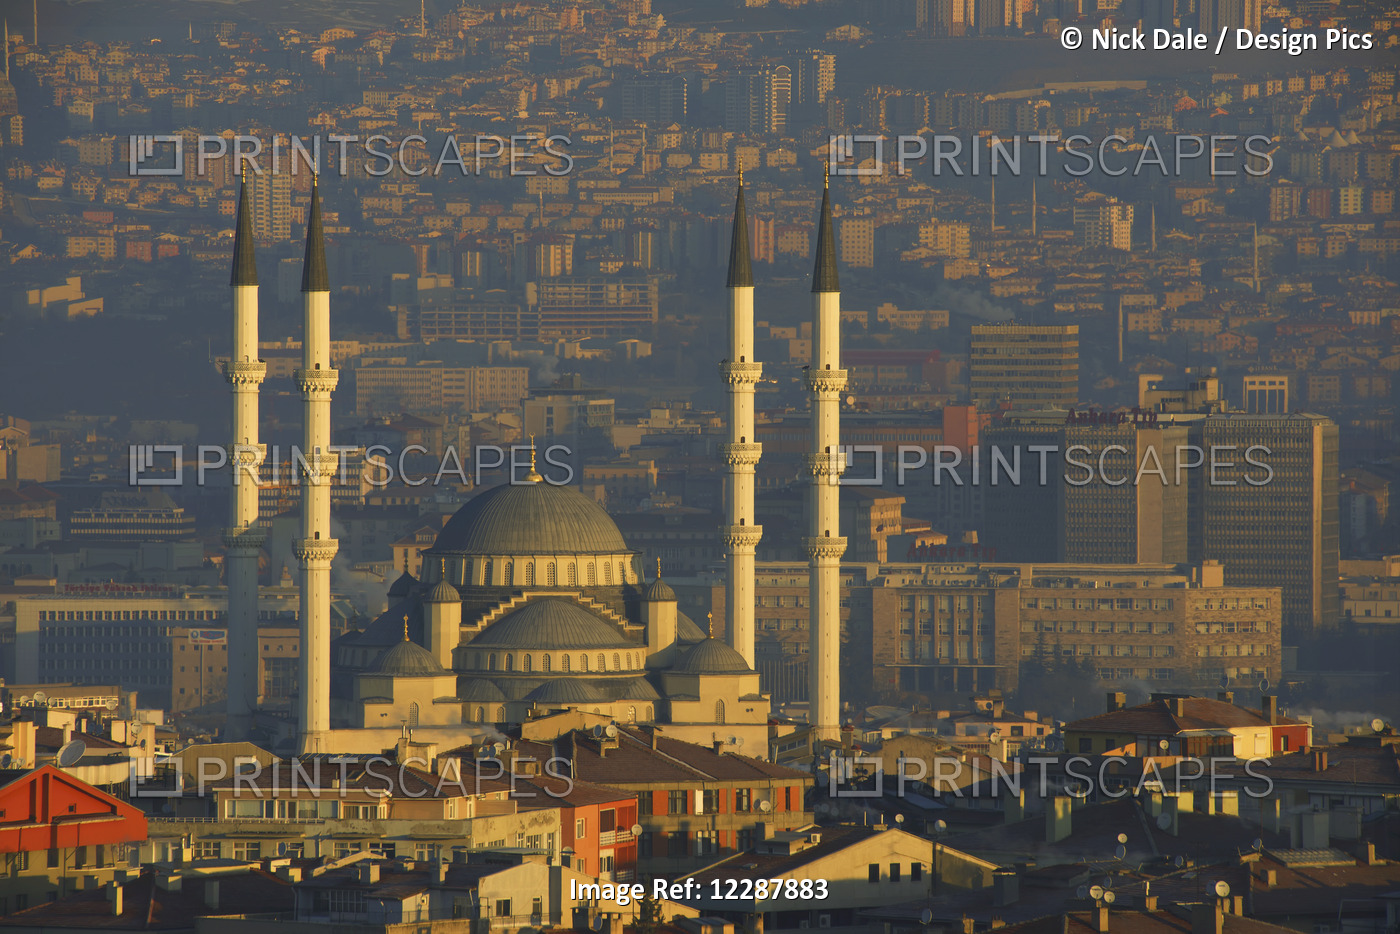 Kocatepe Mosque With Four Minarets At Dawn; Ankara, Turkey